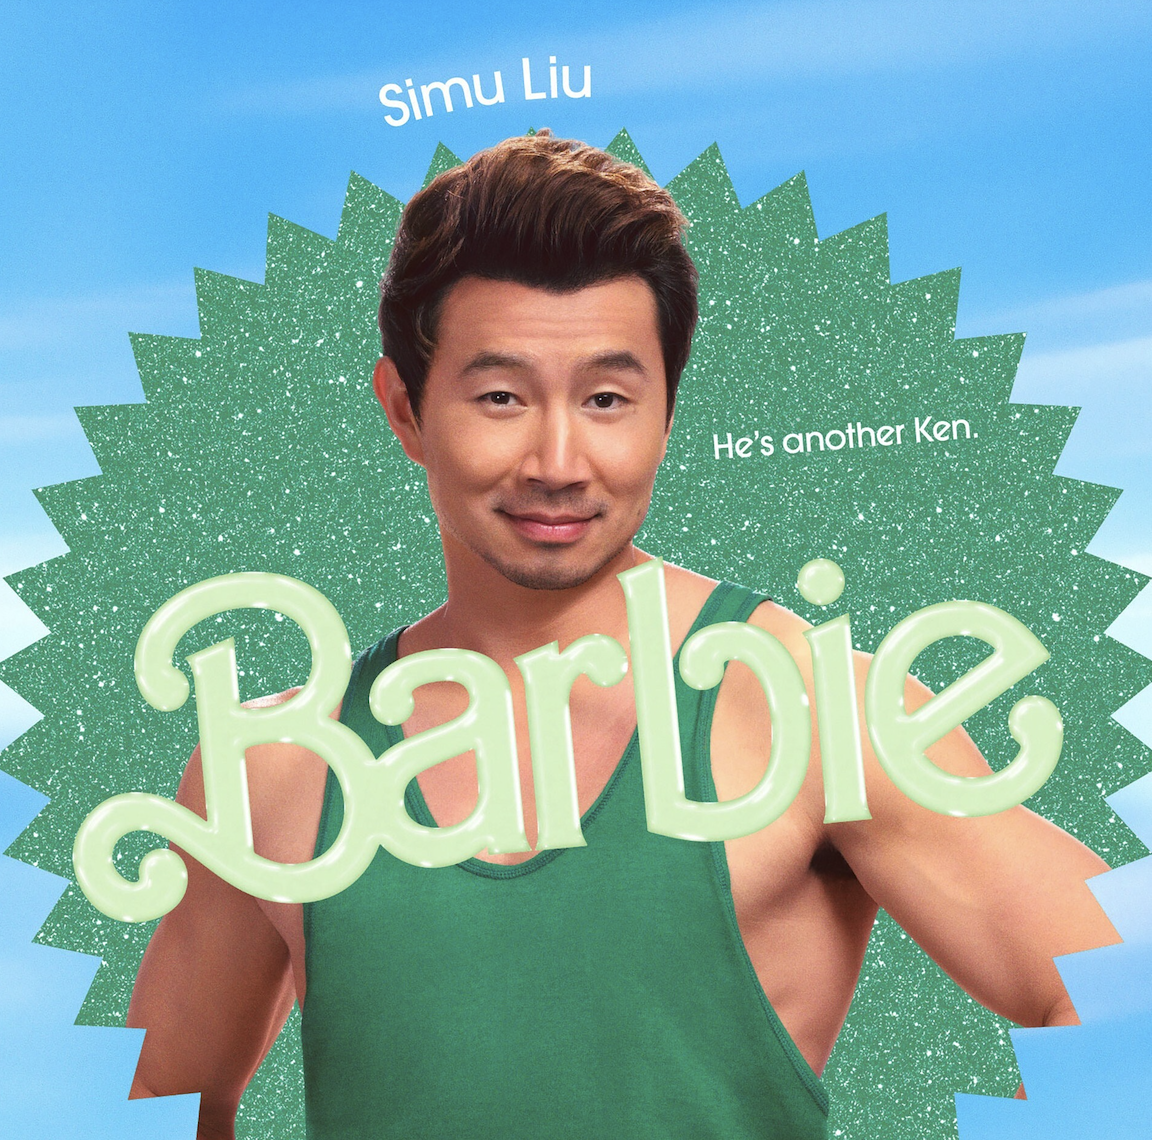 Simu Liu in a Barbie movie poster selfie: &quot;He&#x27;s another Ken&quot;